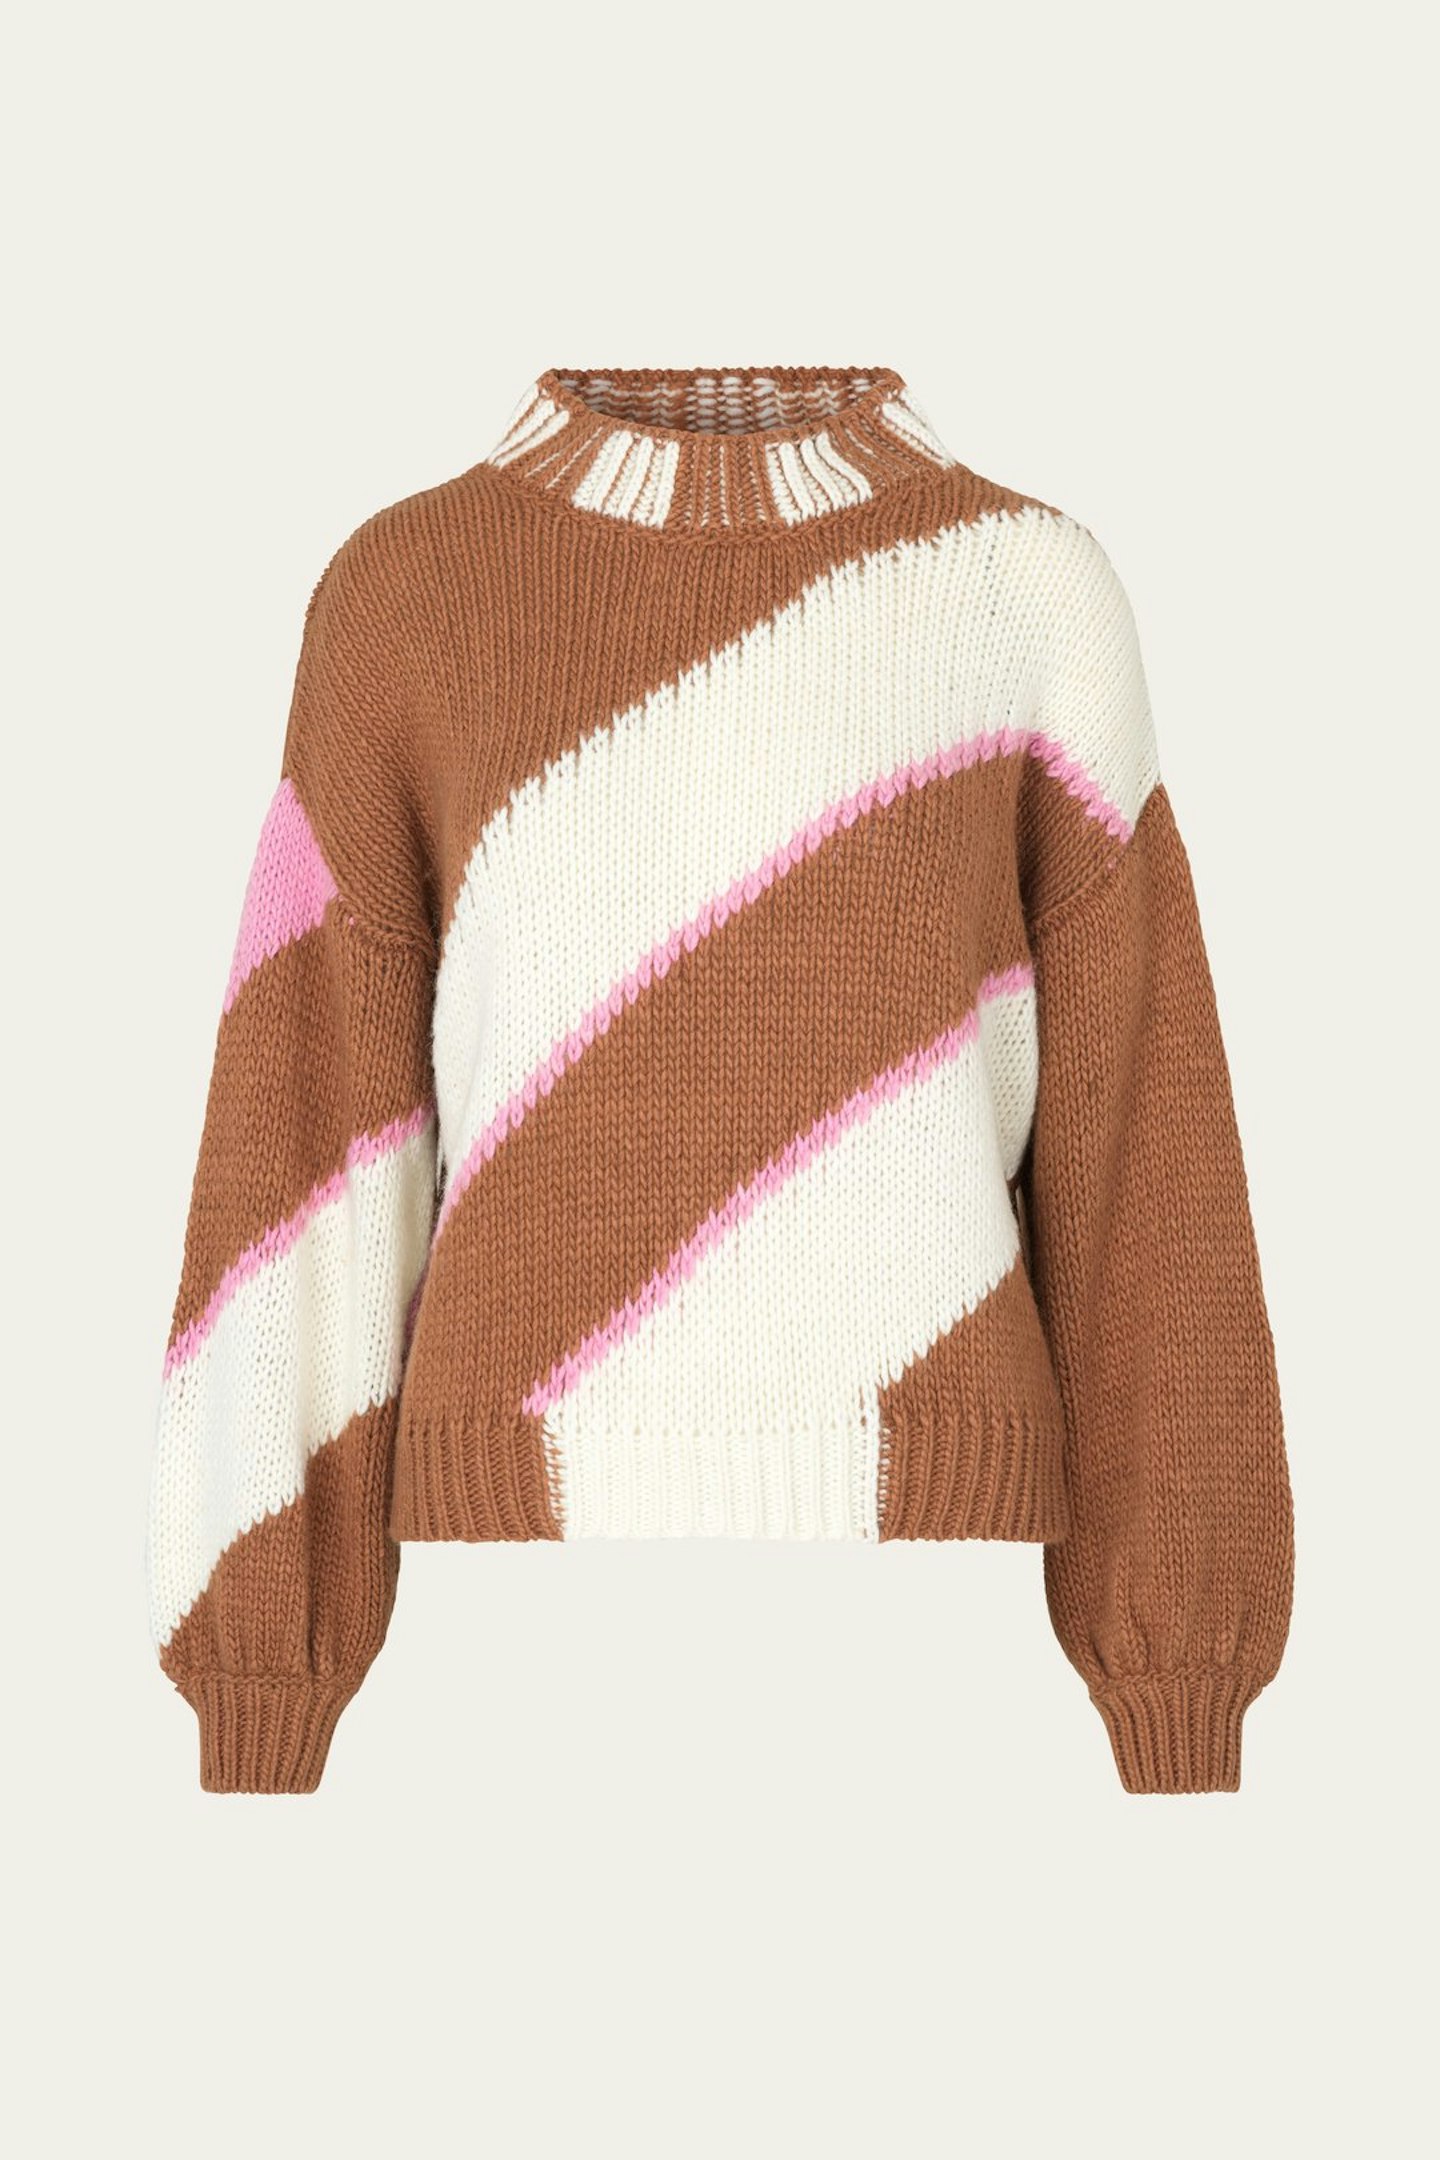 Stine Goya, Adonis Sweater, £110